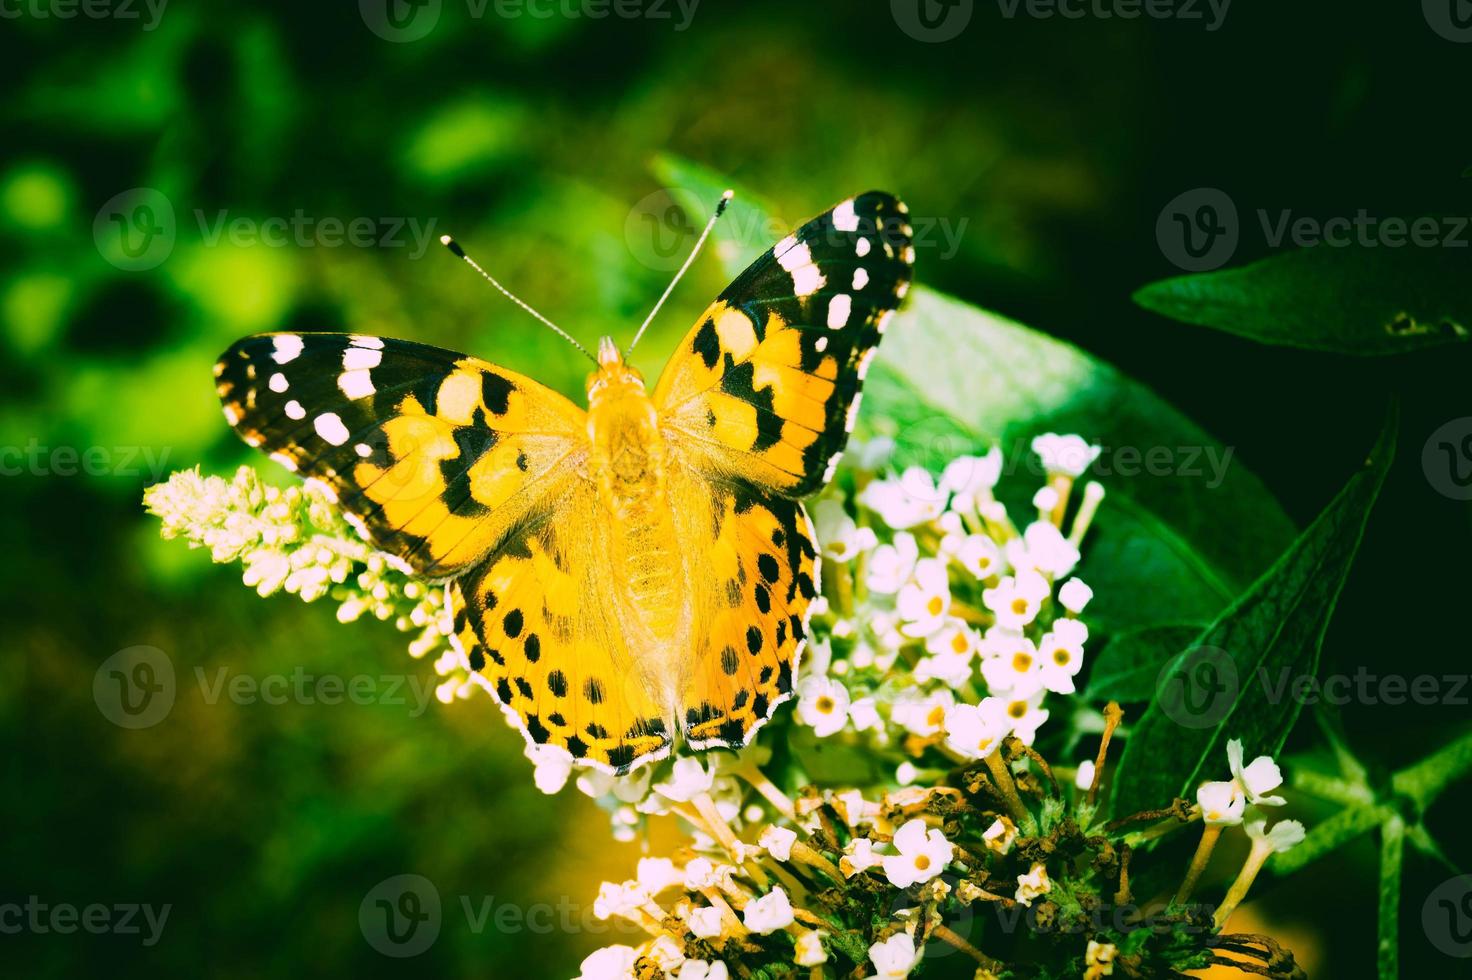 papillon vanessa cardui ou cynthia cardui dans le jardin photo